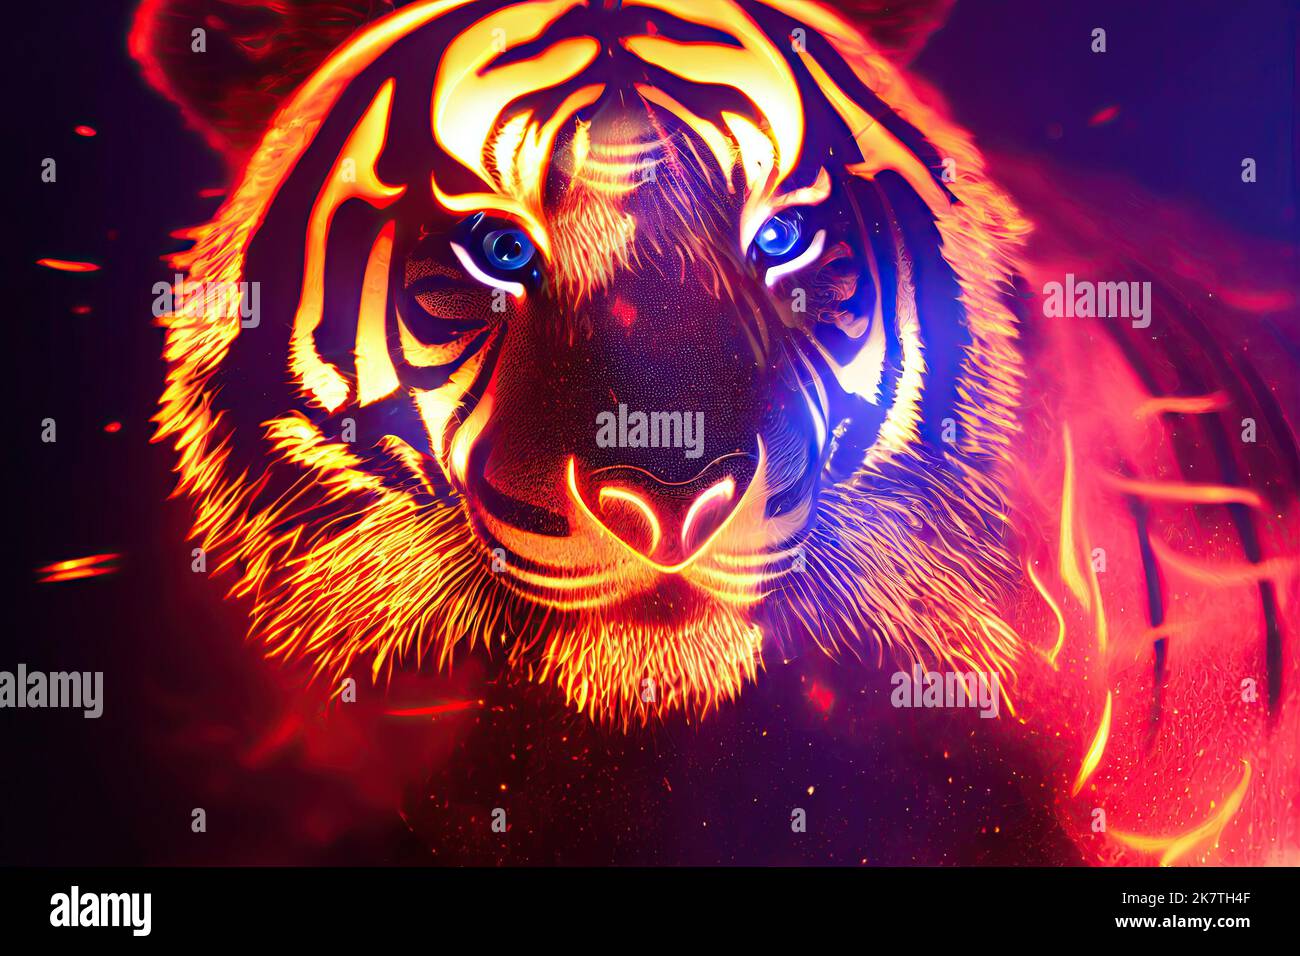 312 Blue Fire Tiger Images Stock Photos  Vectors  Shutterstock